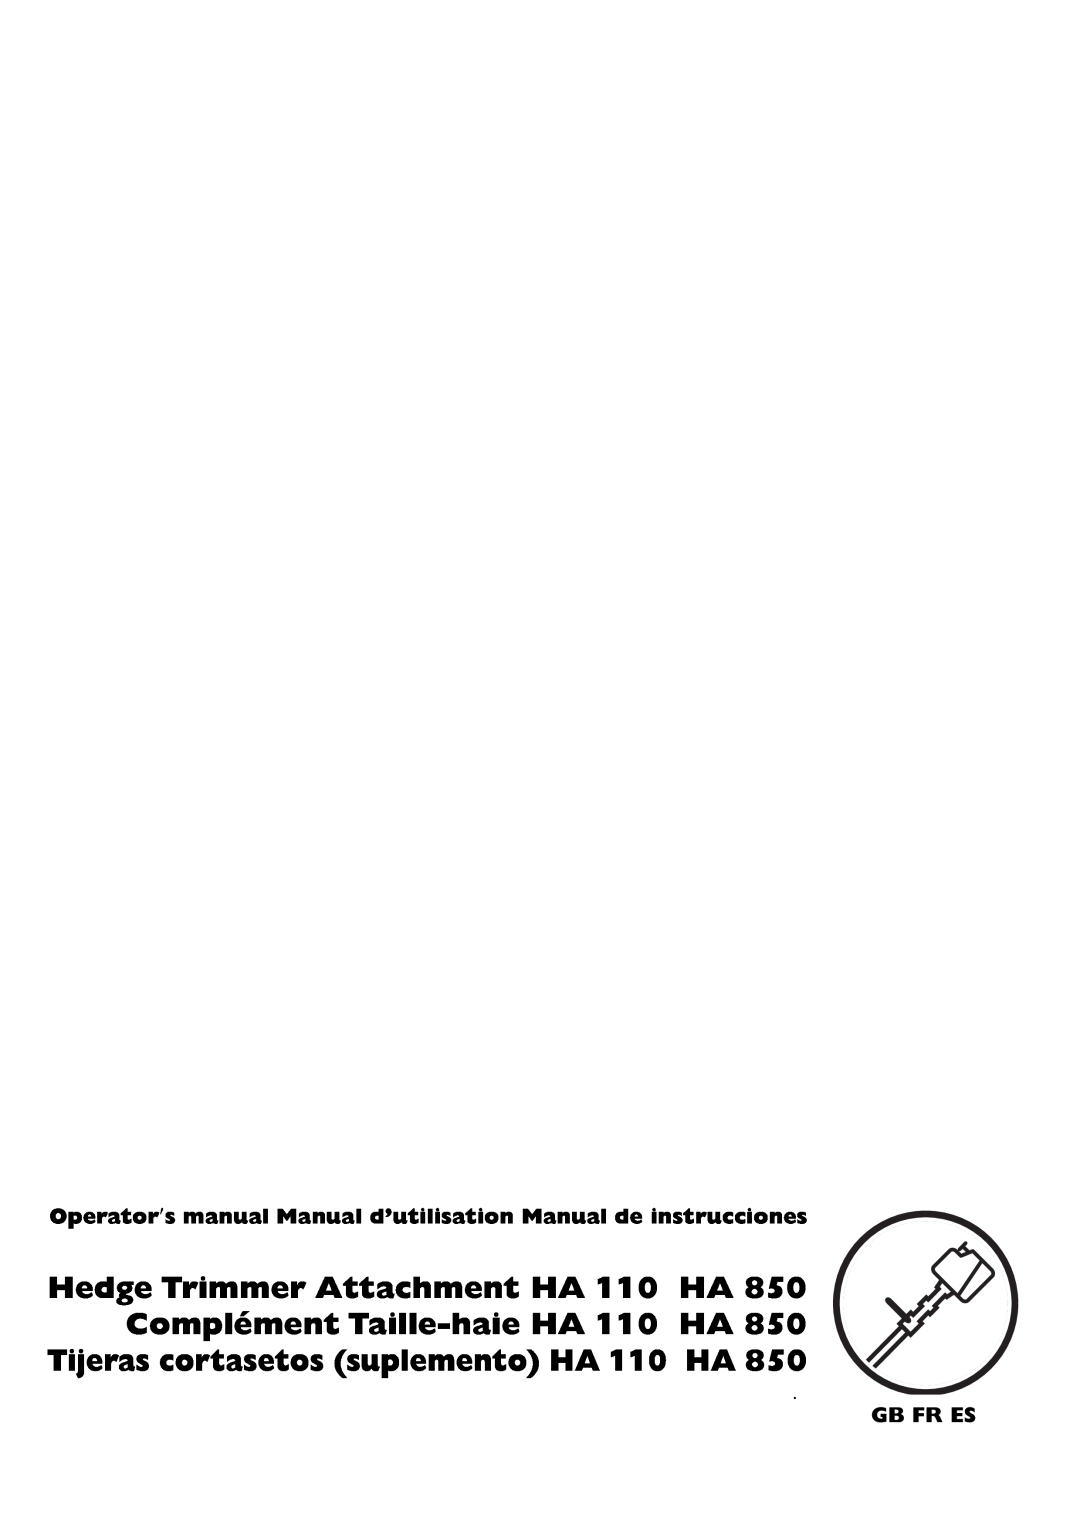 Husqvarna HA 110, HA 110 manual English GB FR ES 